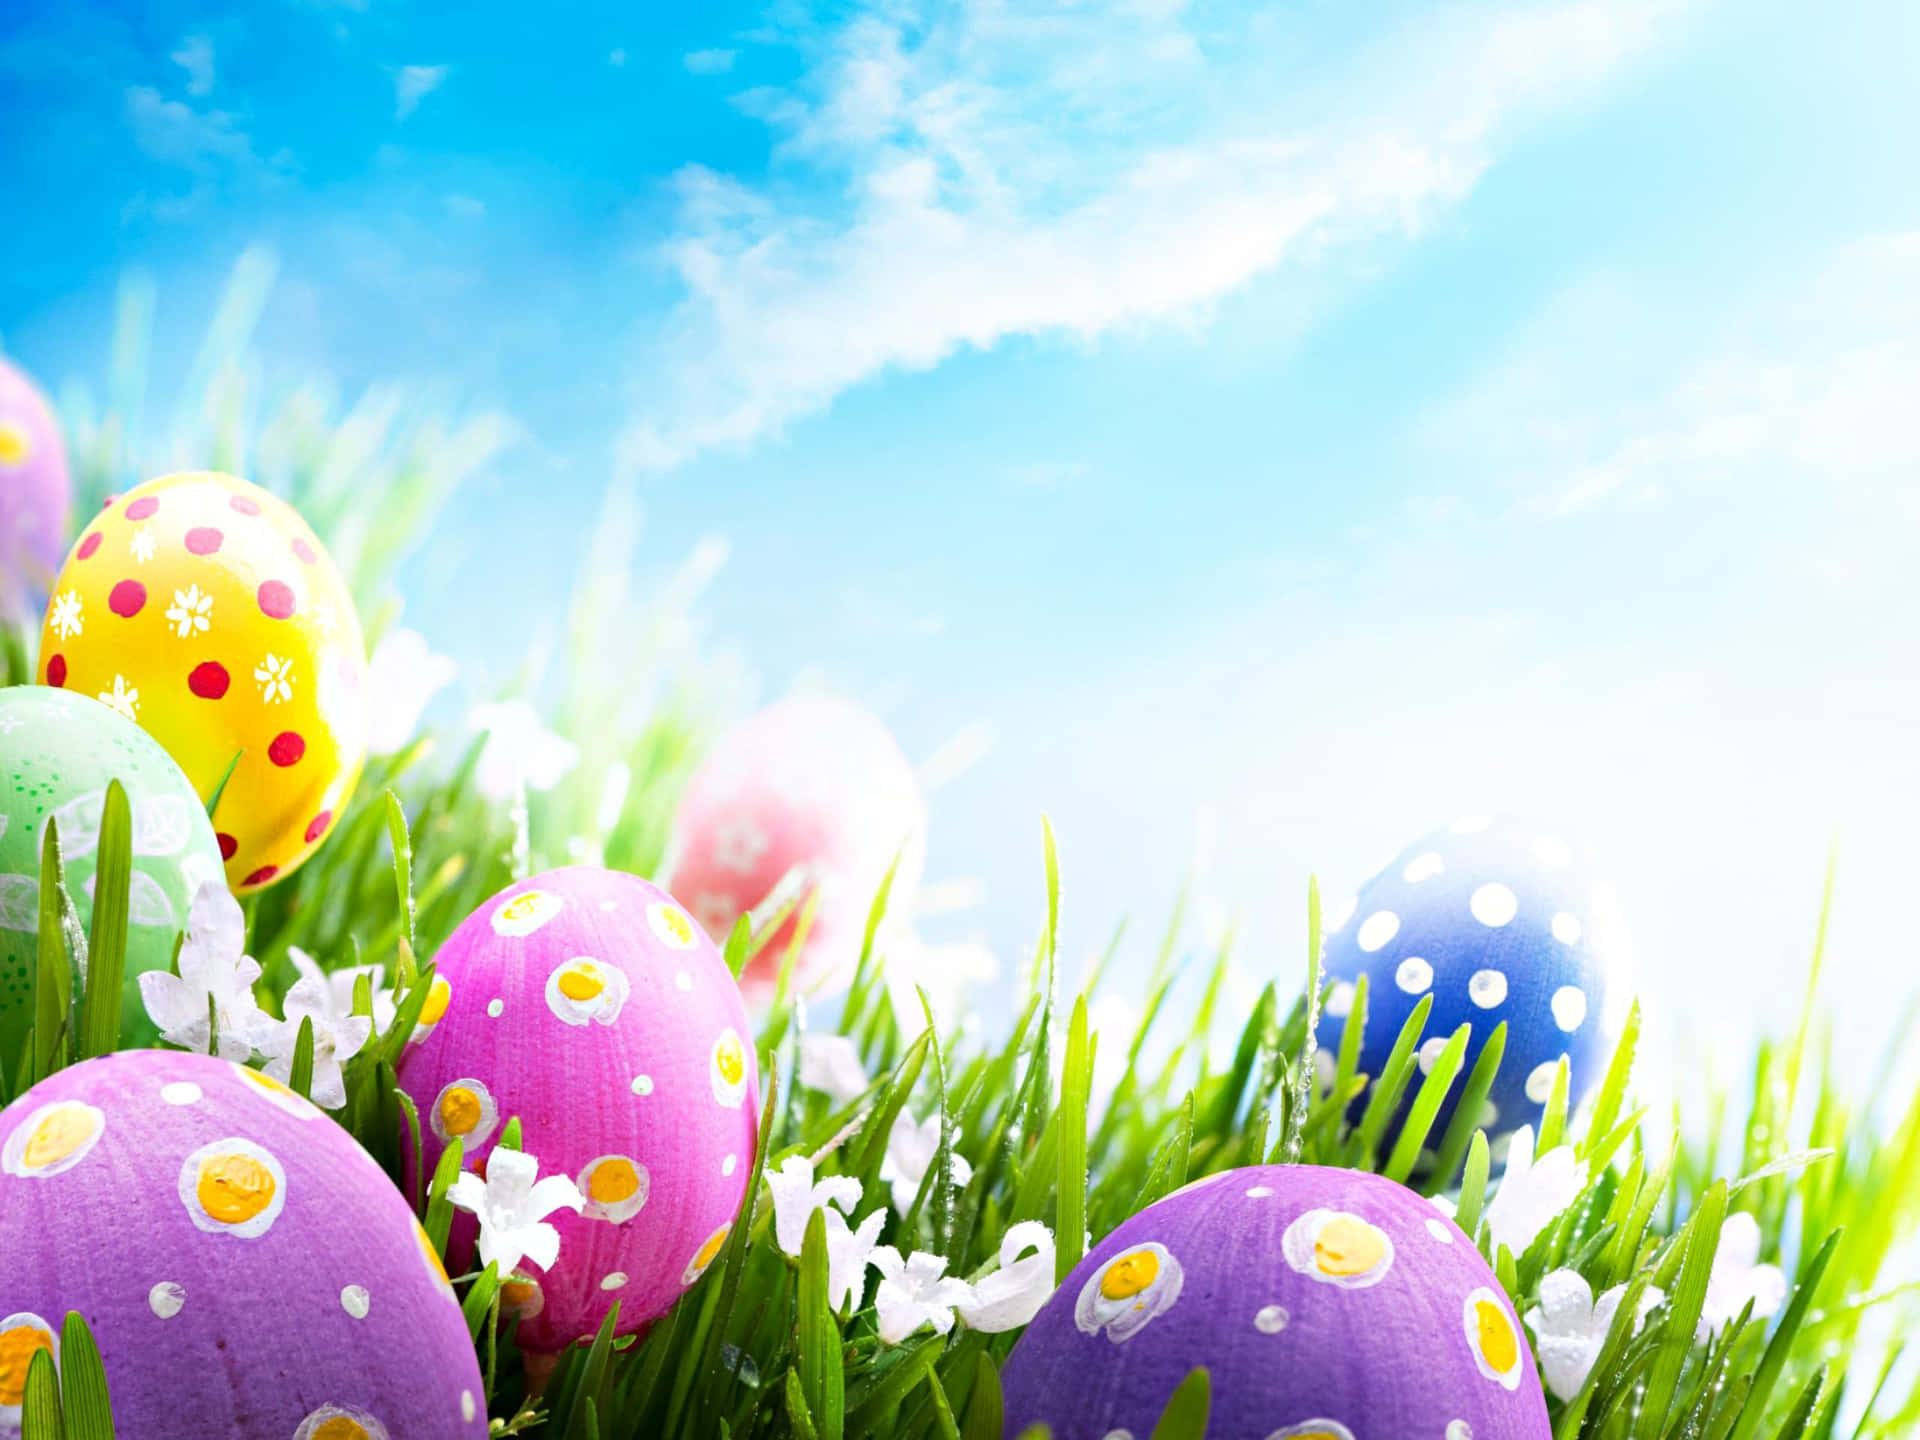 Adorable Easter Bunnies Celebrating Springtime